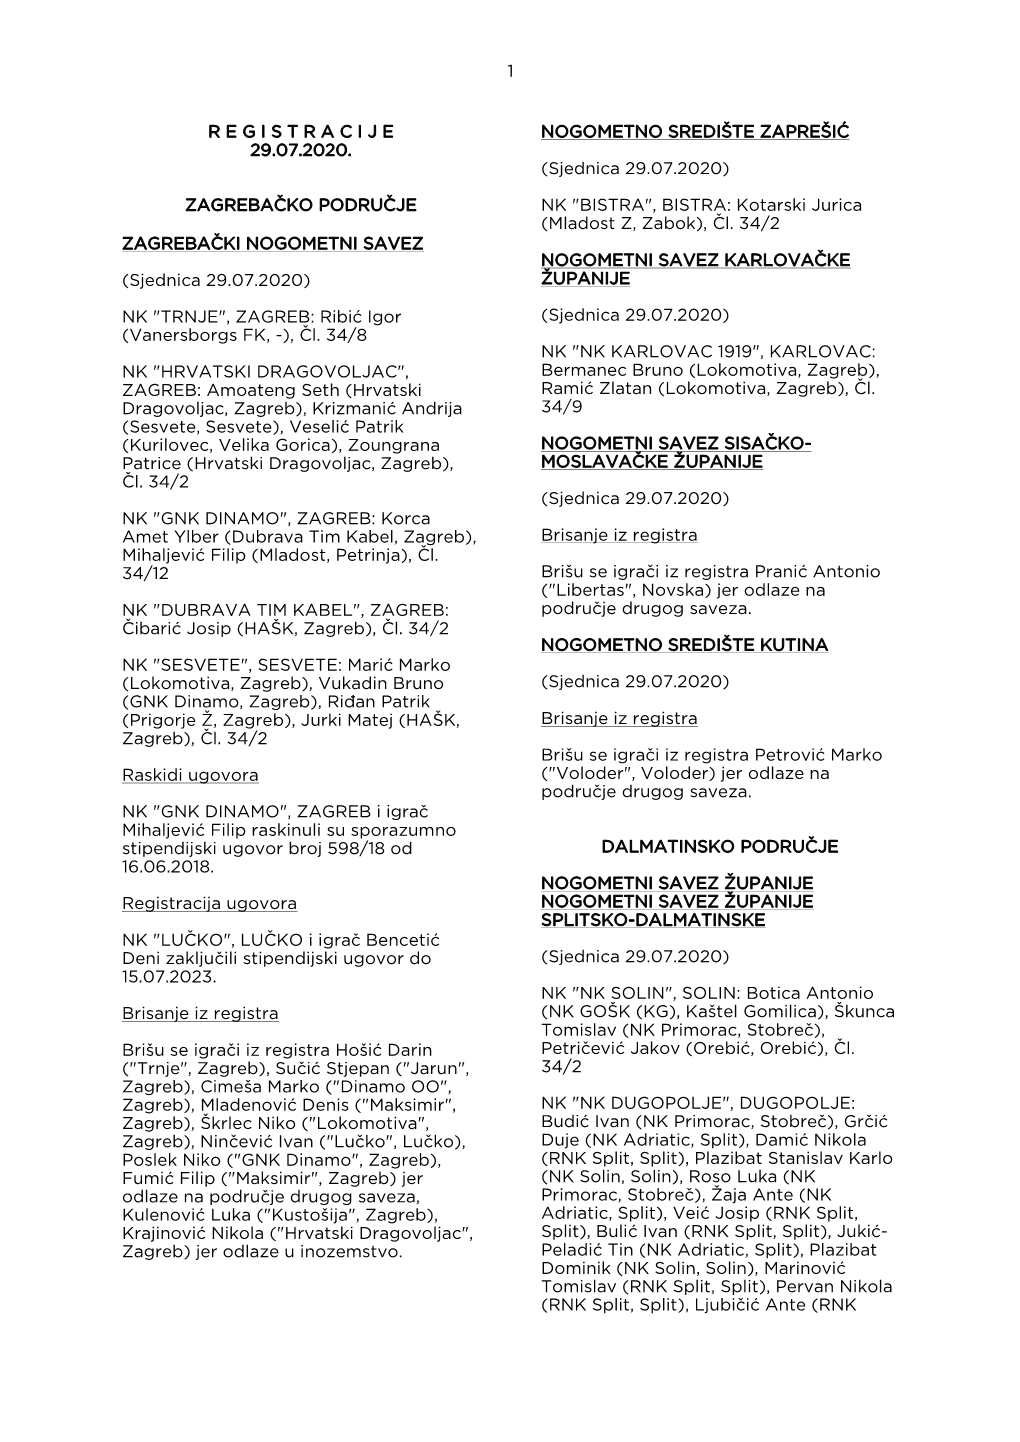 (Sjednica 29.07.2020) NK "GNK DINAMO", ZAGREB: Korca Amet Ylber (Dubrava Tim Kabel, Zagreb), Brisanje Iz Registra Mihaljević Filip (Mladost, Petrinja), Čl